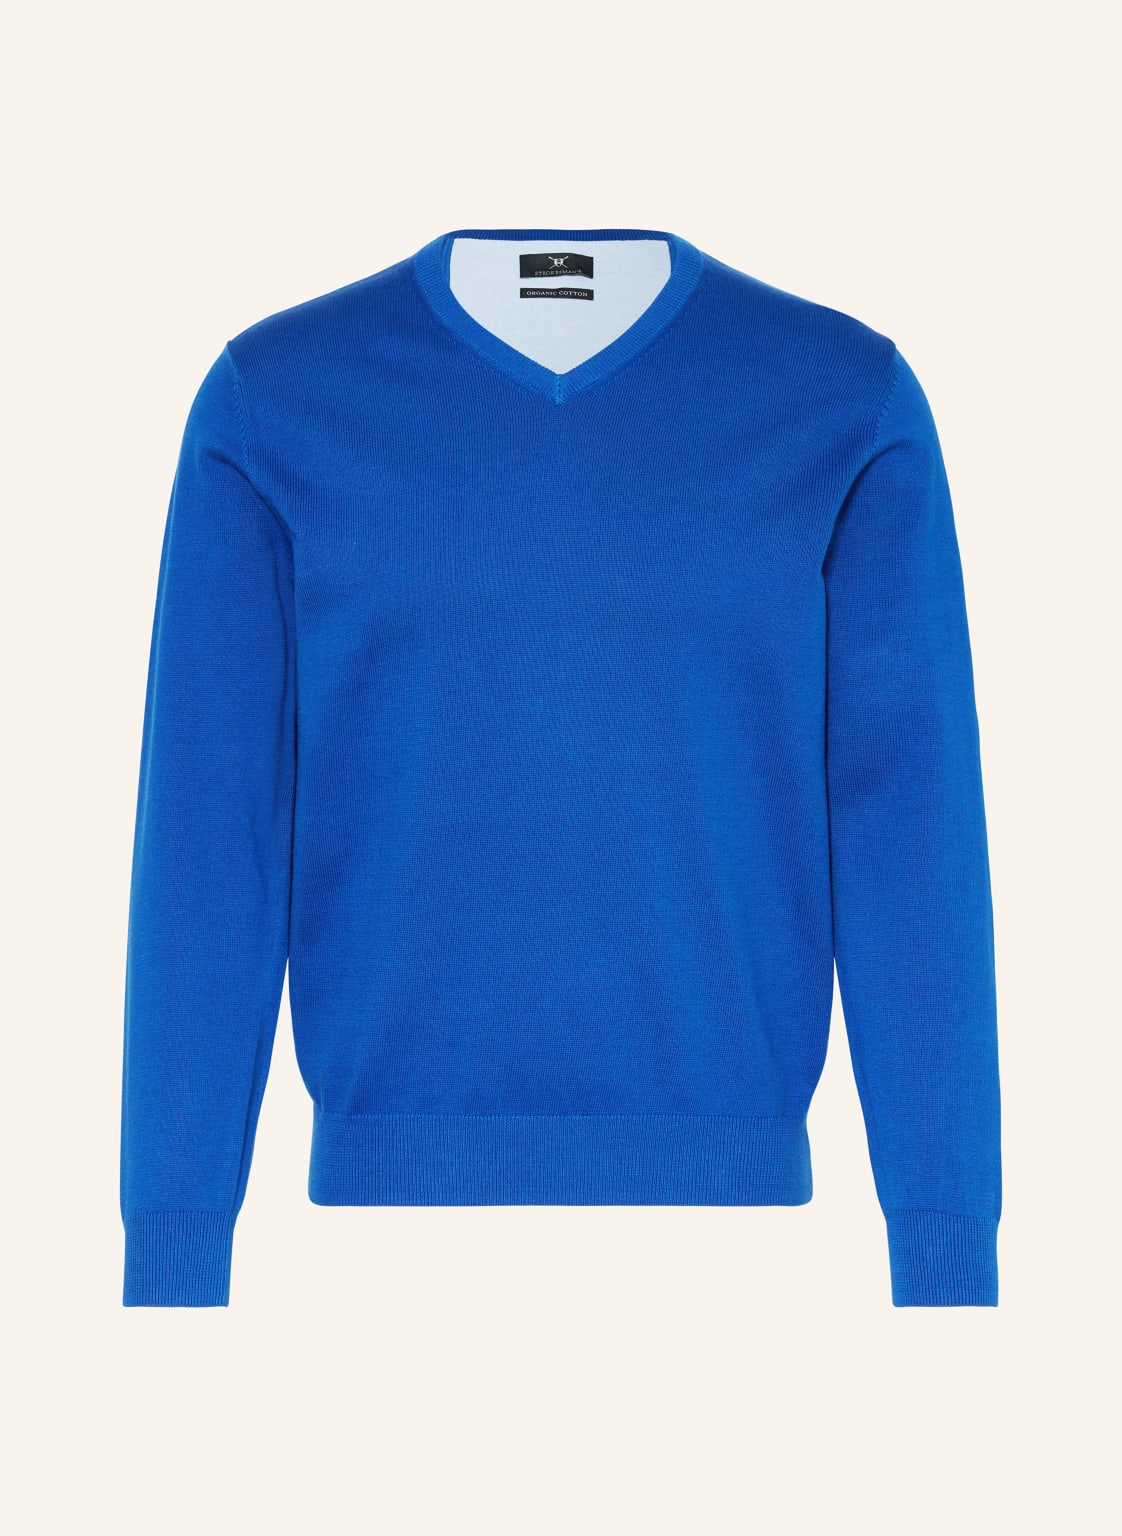 Strokesman's Pullover blau von STROKESMAN'S